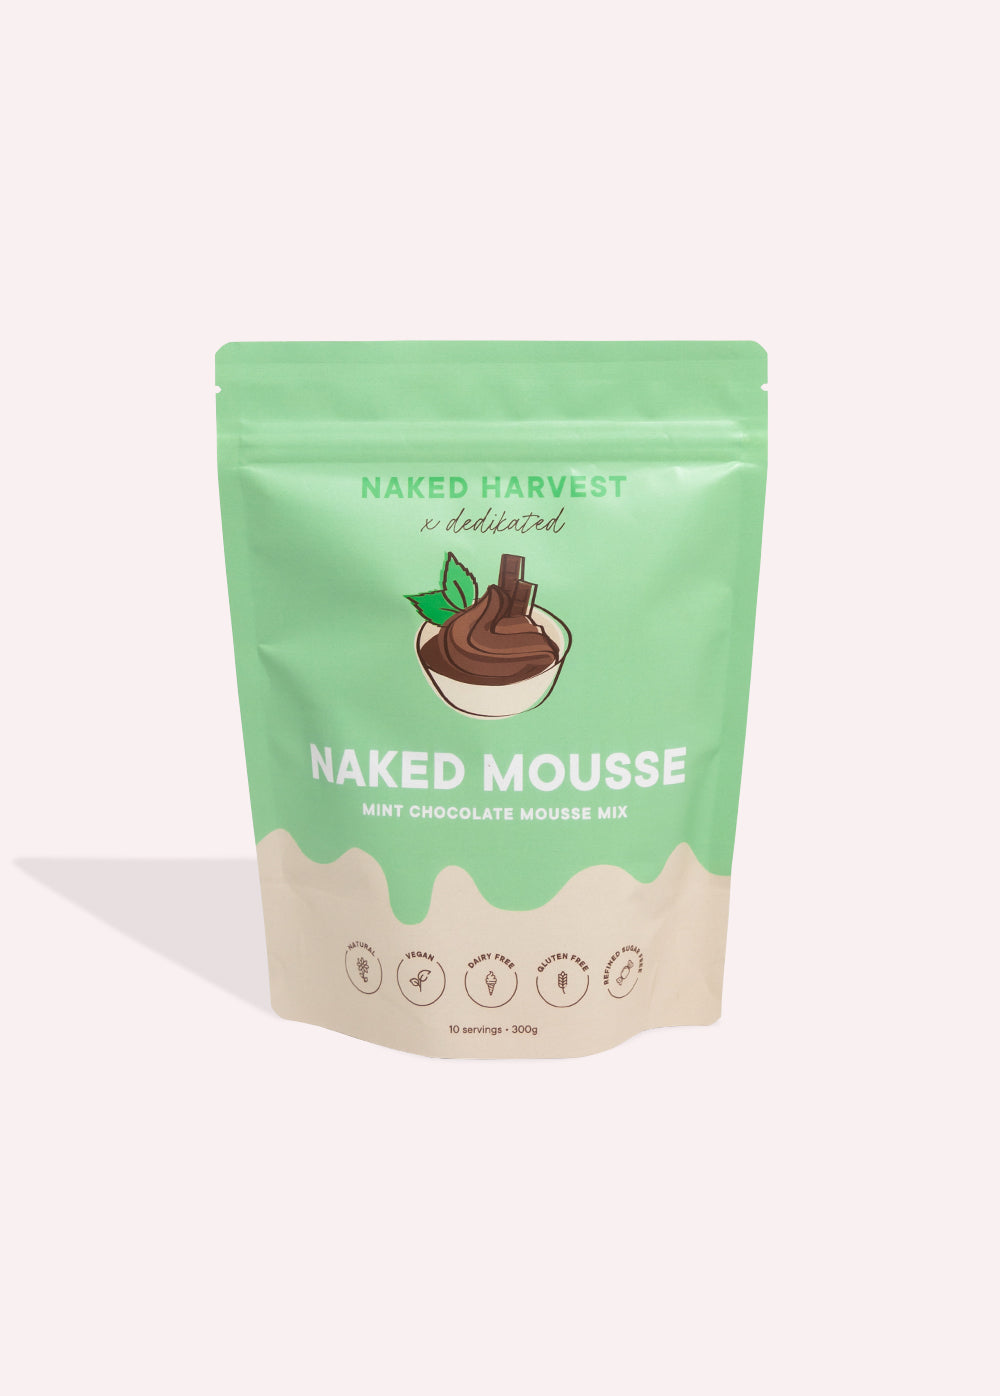 NH X DediKated Naked Mousse Mint Chocolate